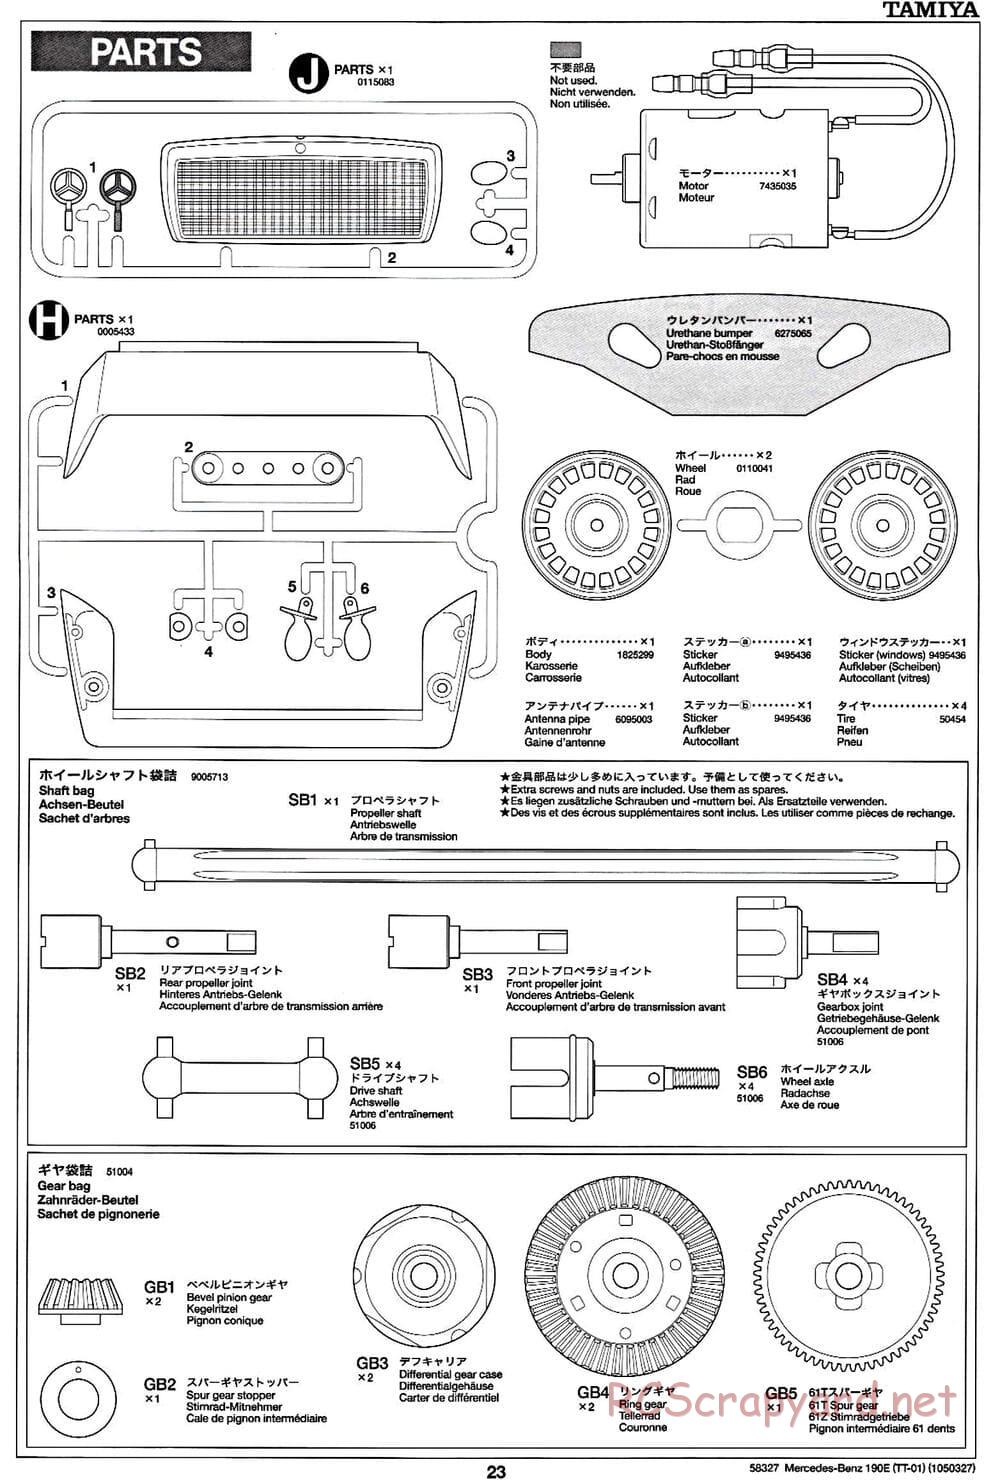 Tamiya - Mercedes Benz 190E Evo.II AMG - TT-01 Chassis - Manual - Page 23